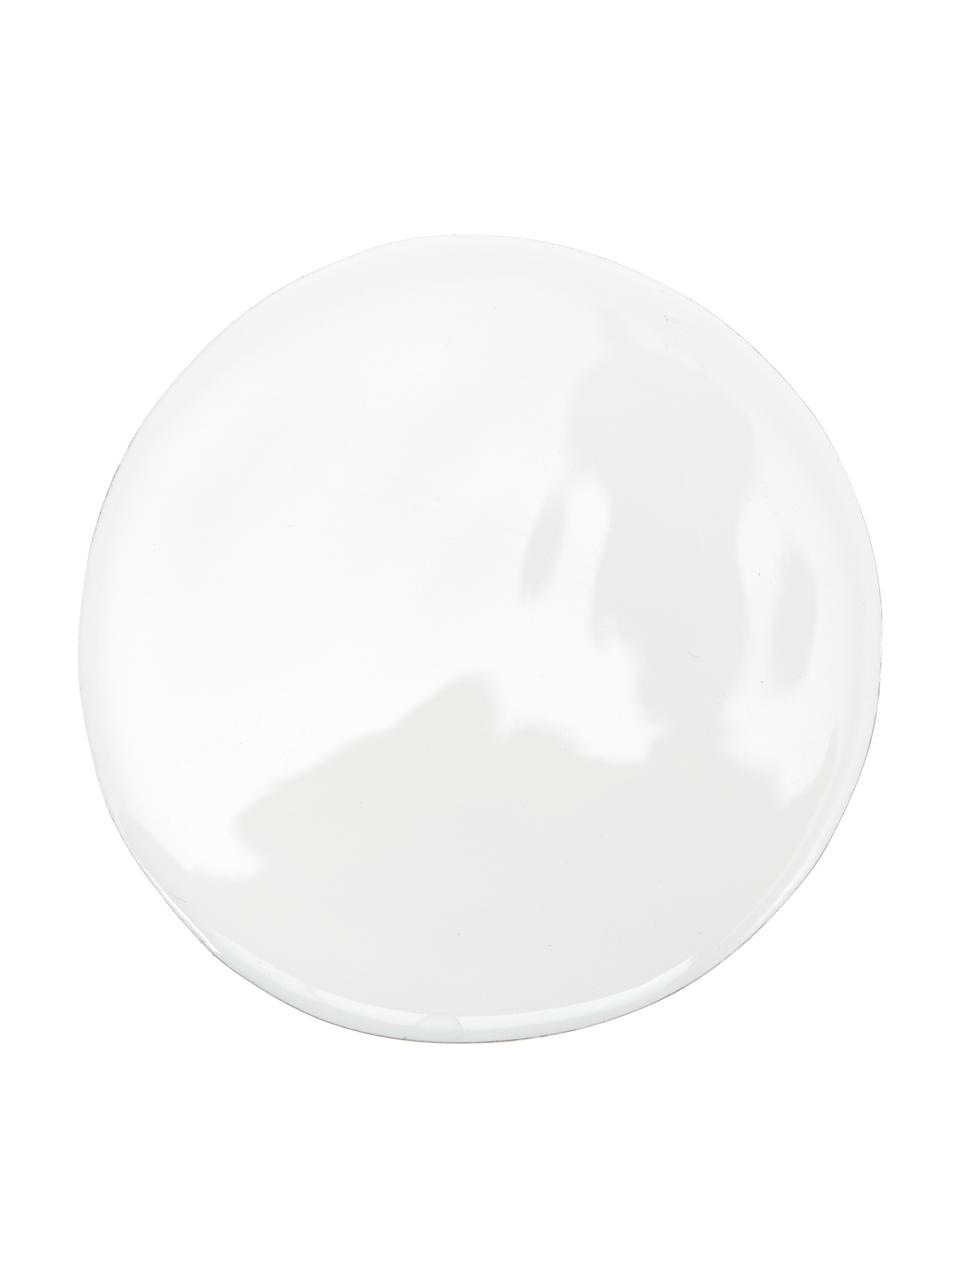 Witte onderzetters Lugo van mangohout, 4 stuks, Mangohout, Wit, mangohoutkleurig, Ø 10 x H 2 cm